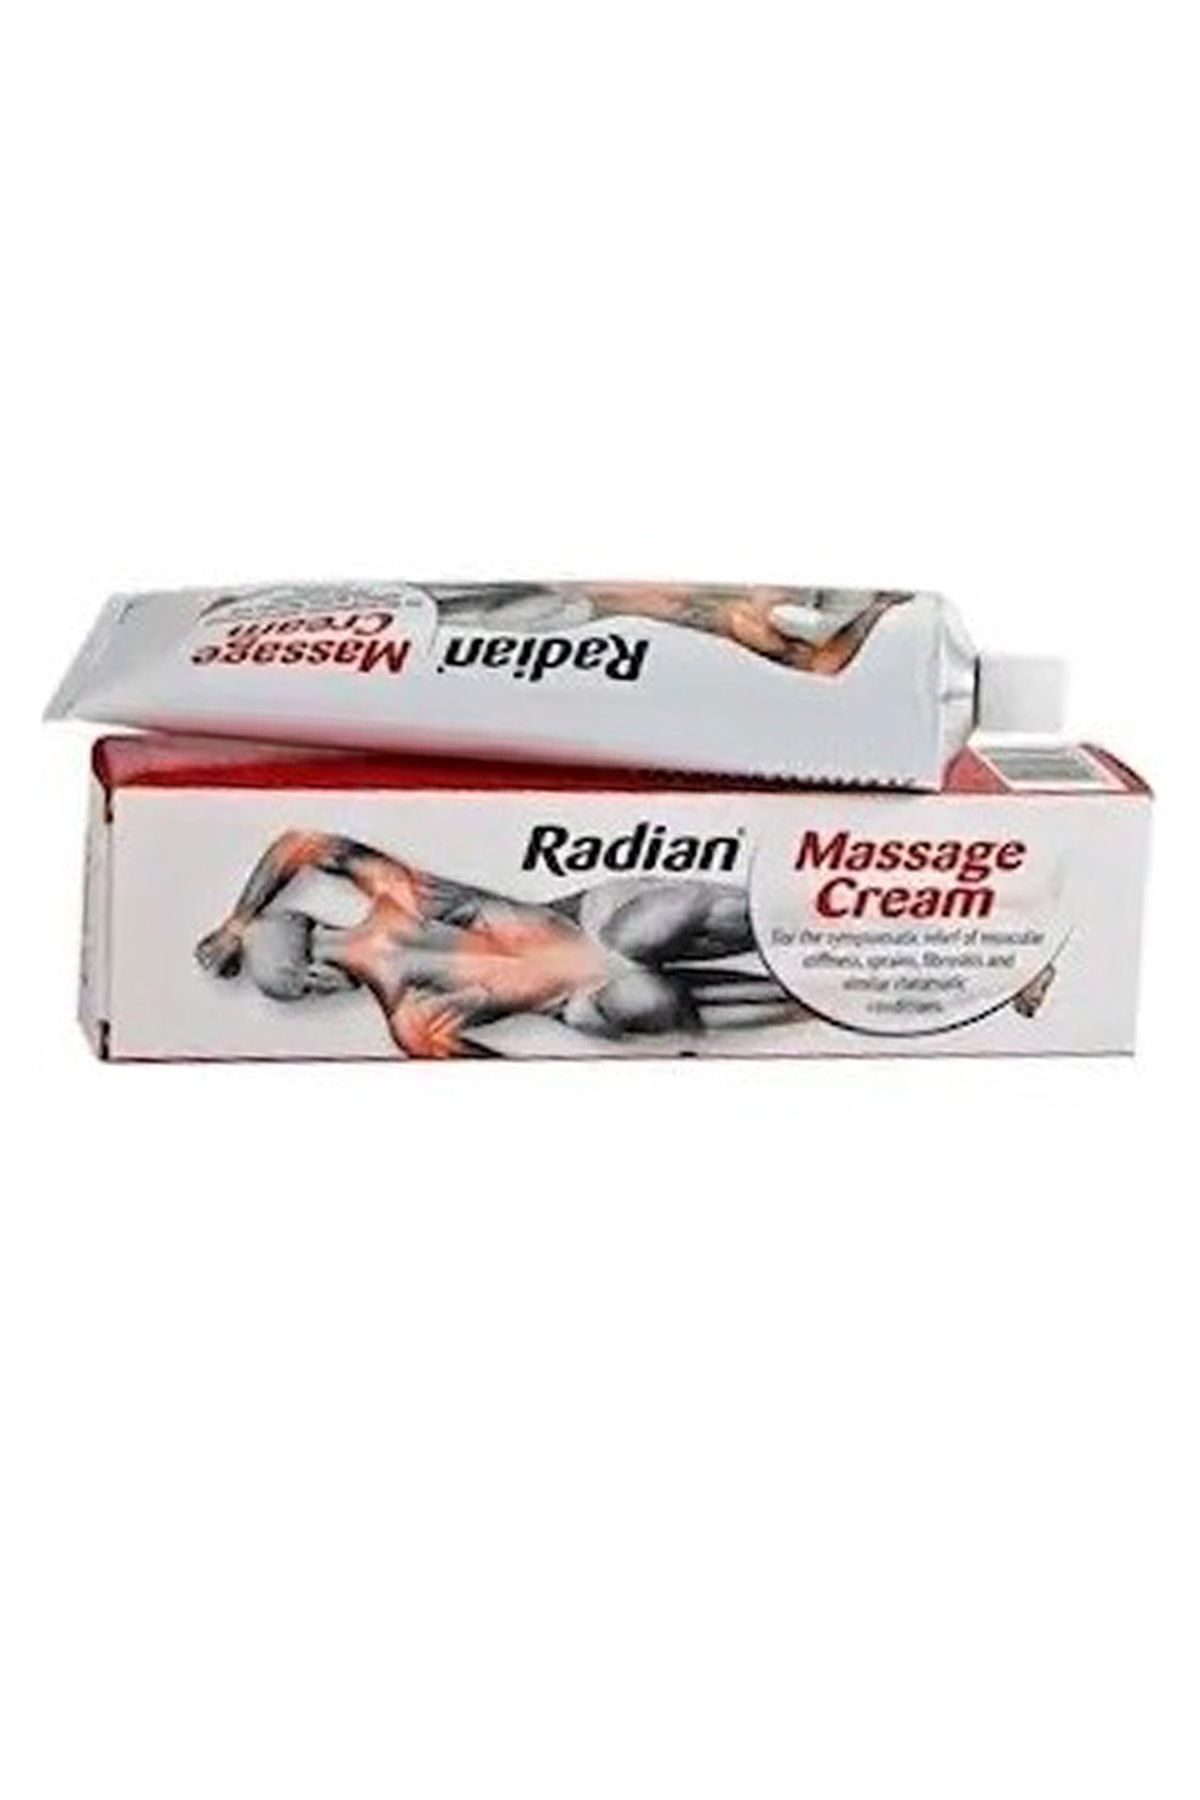 Radiance Stone Radian Massage Cream 100 G